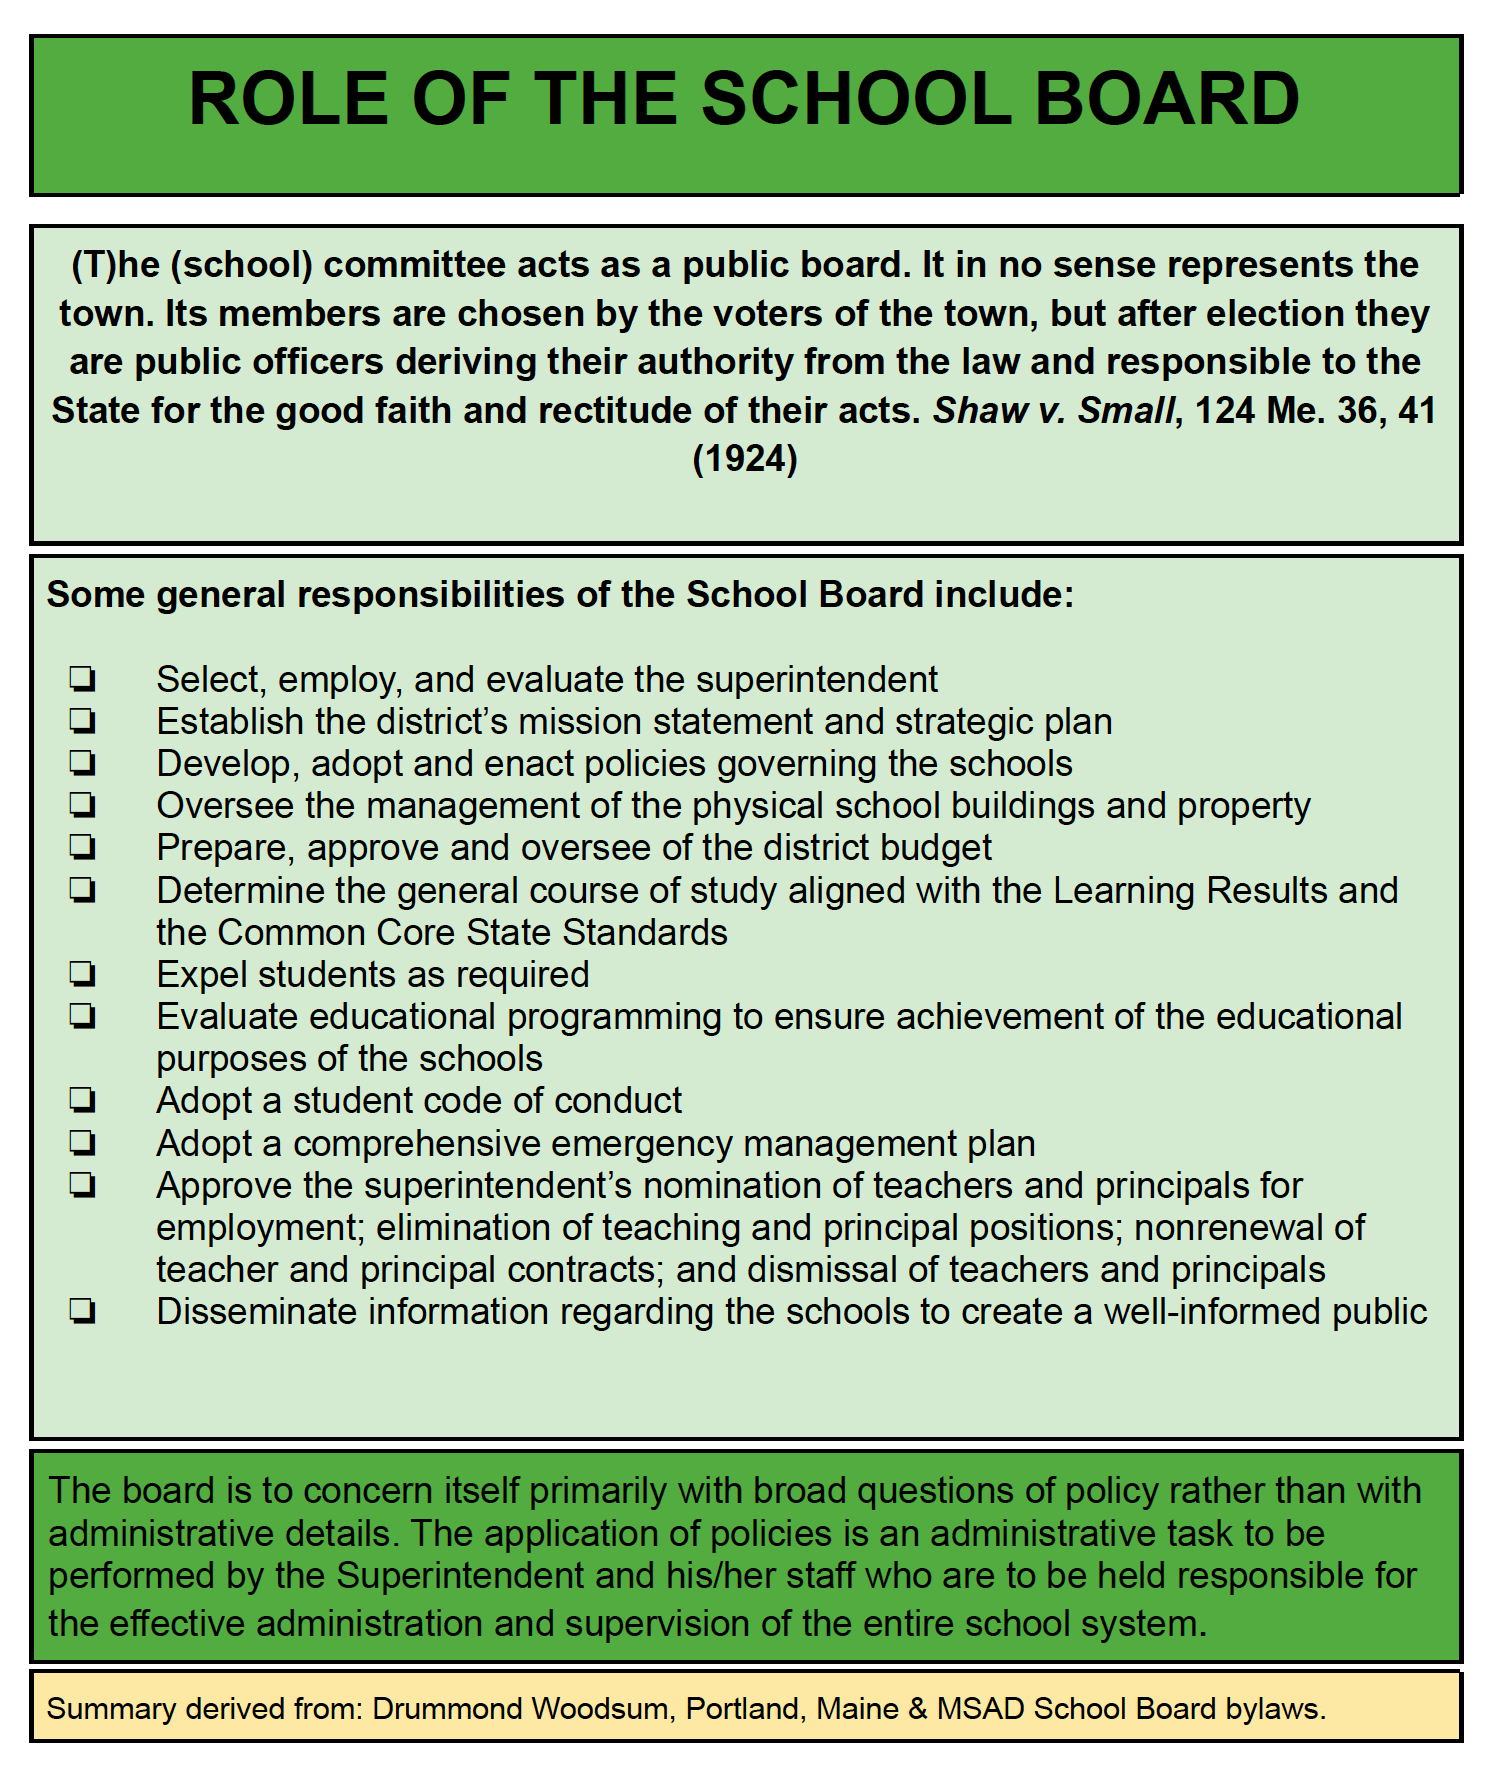 Role of the School Board